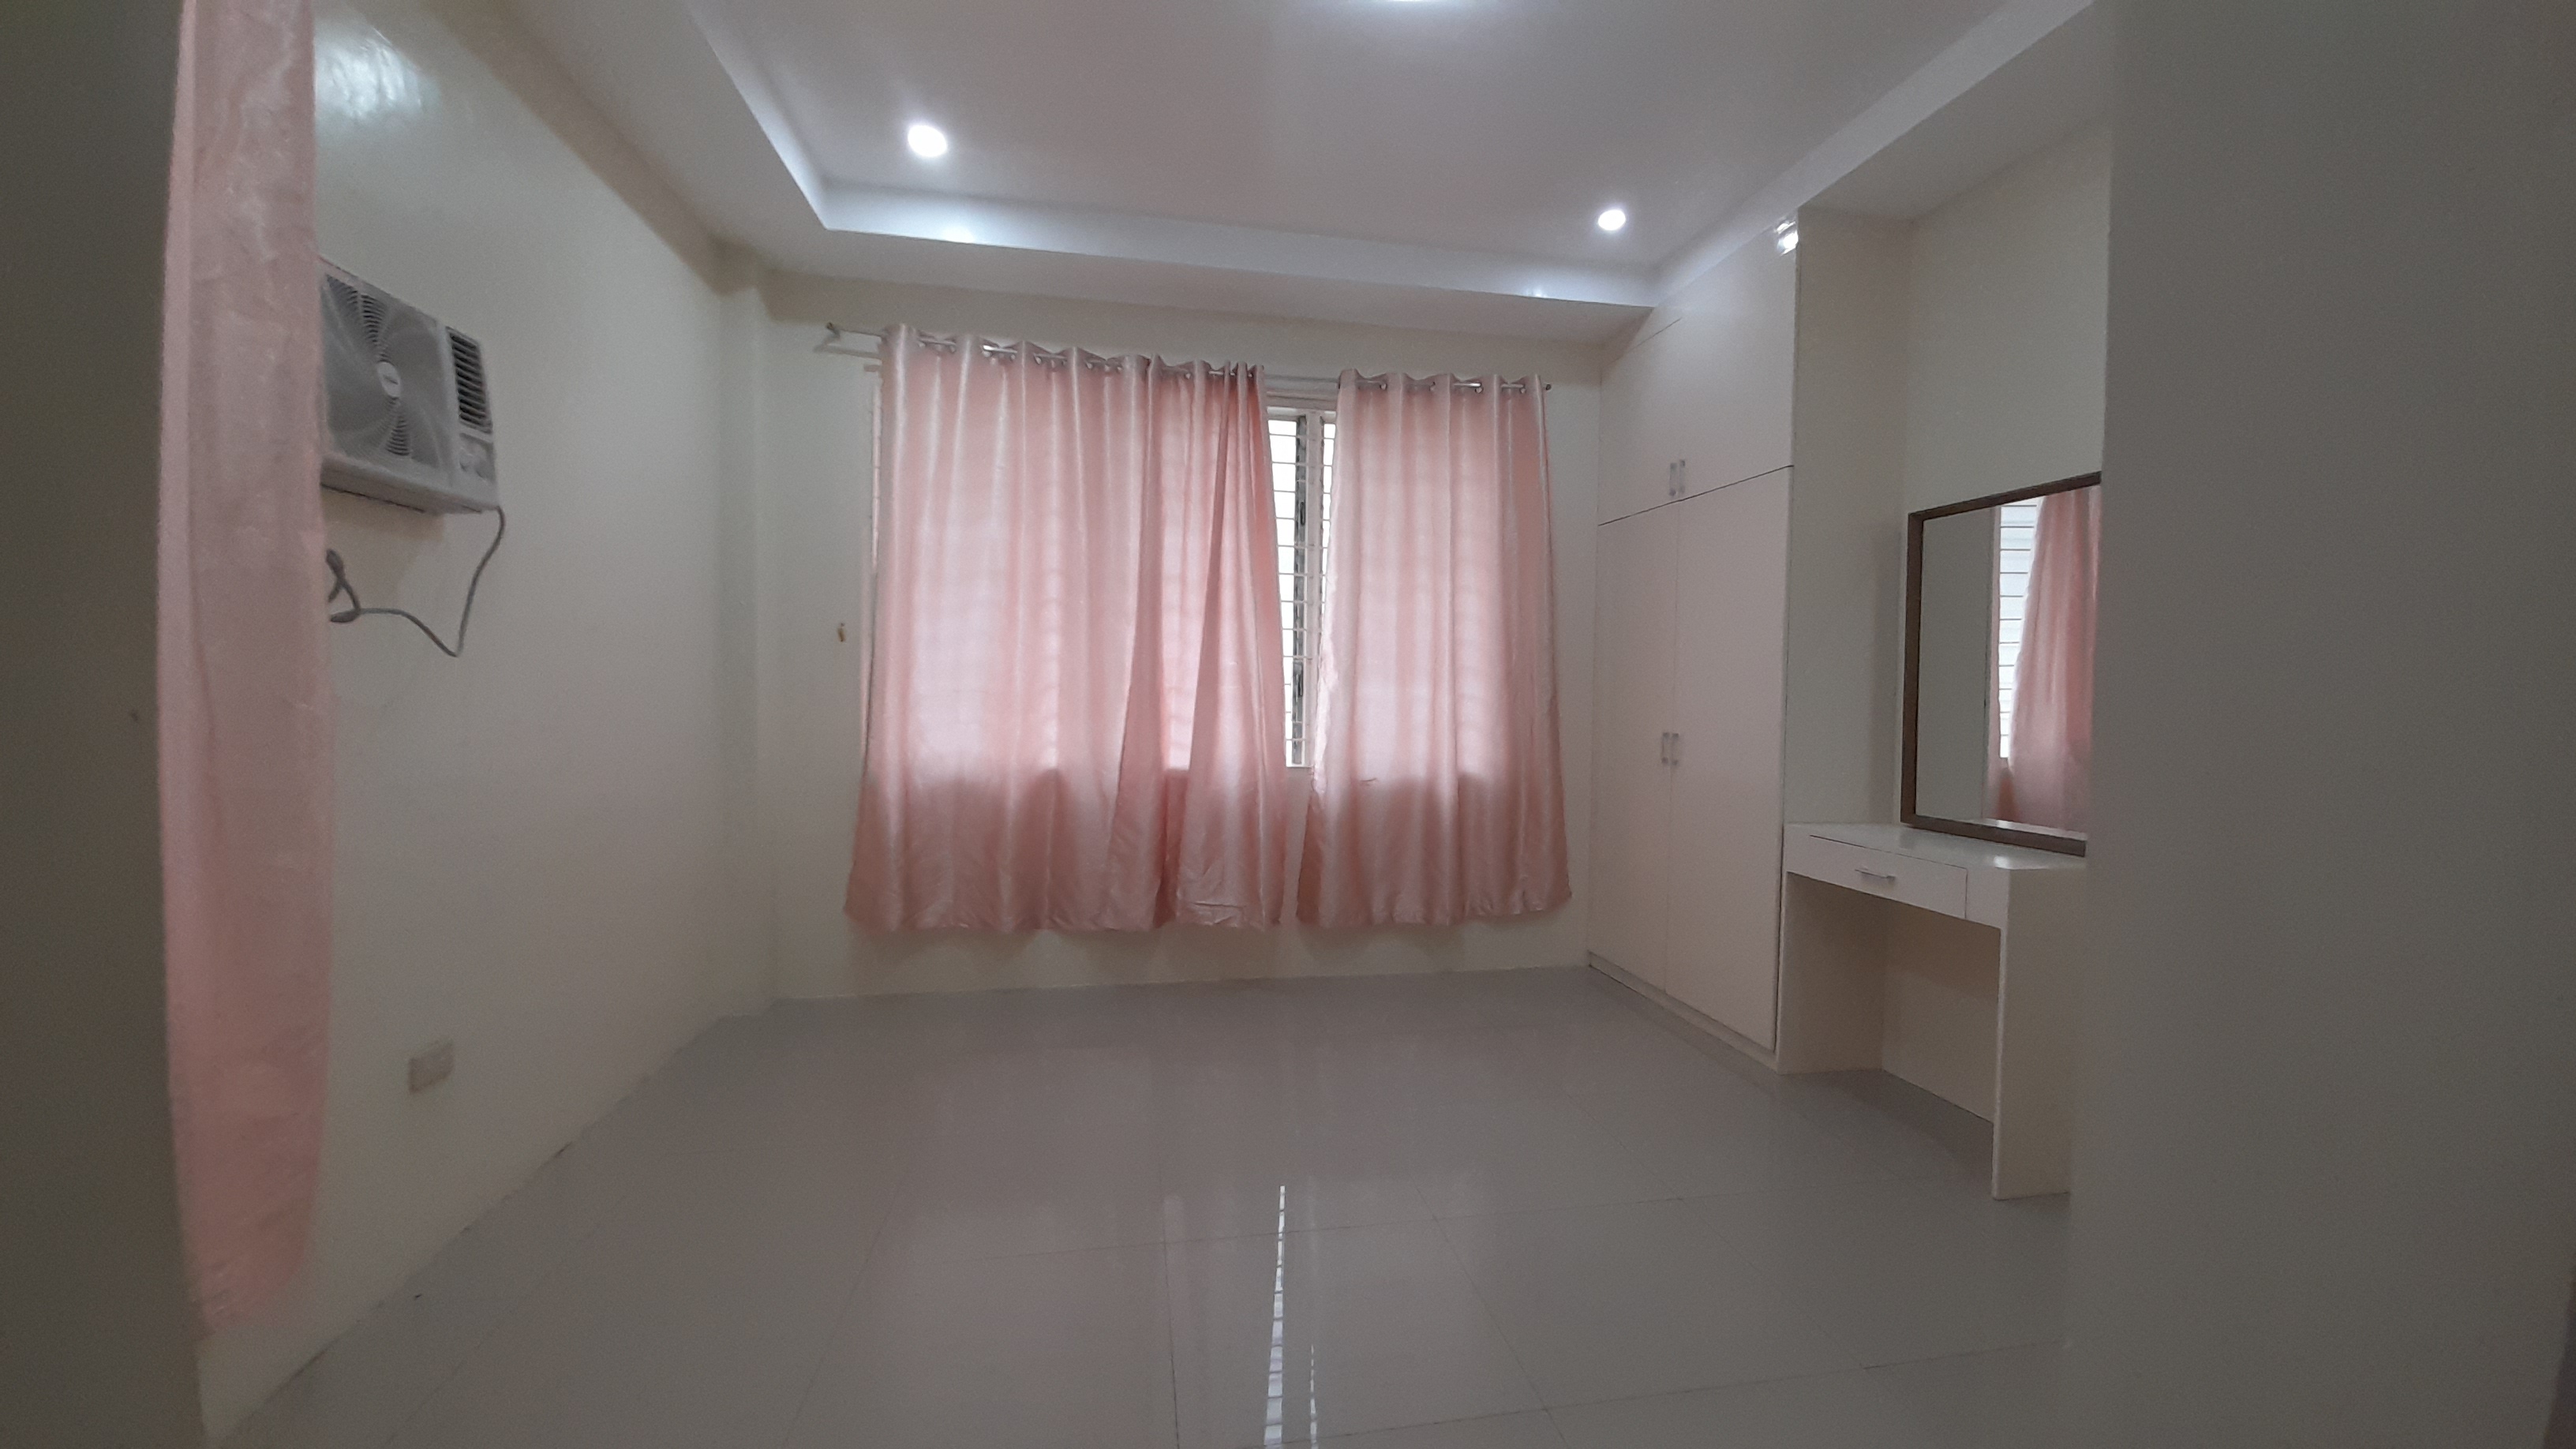 4-bedroom-semi-furnished-bungalow-house-in-banilad-cebu-city